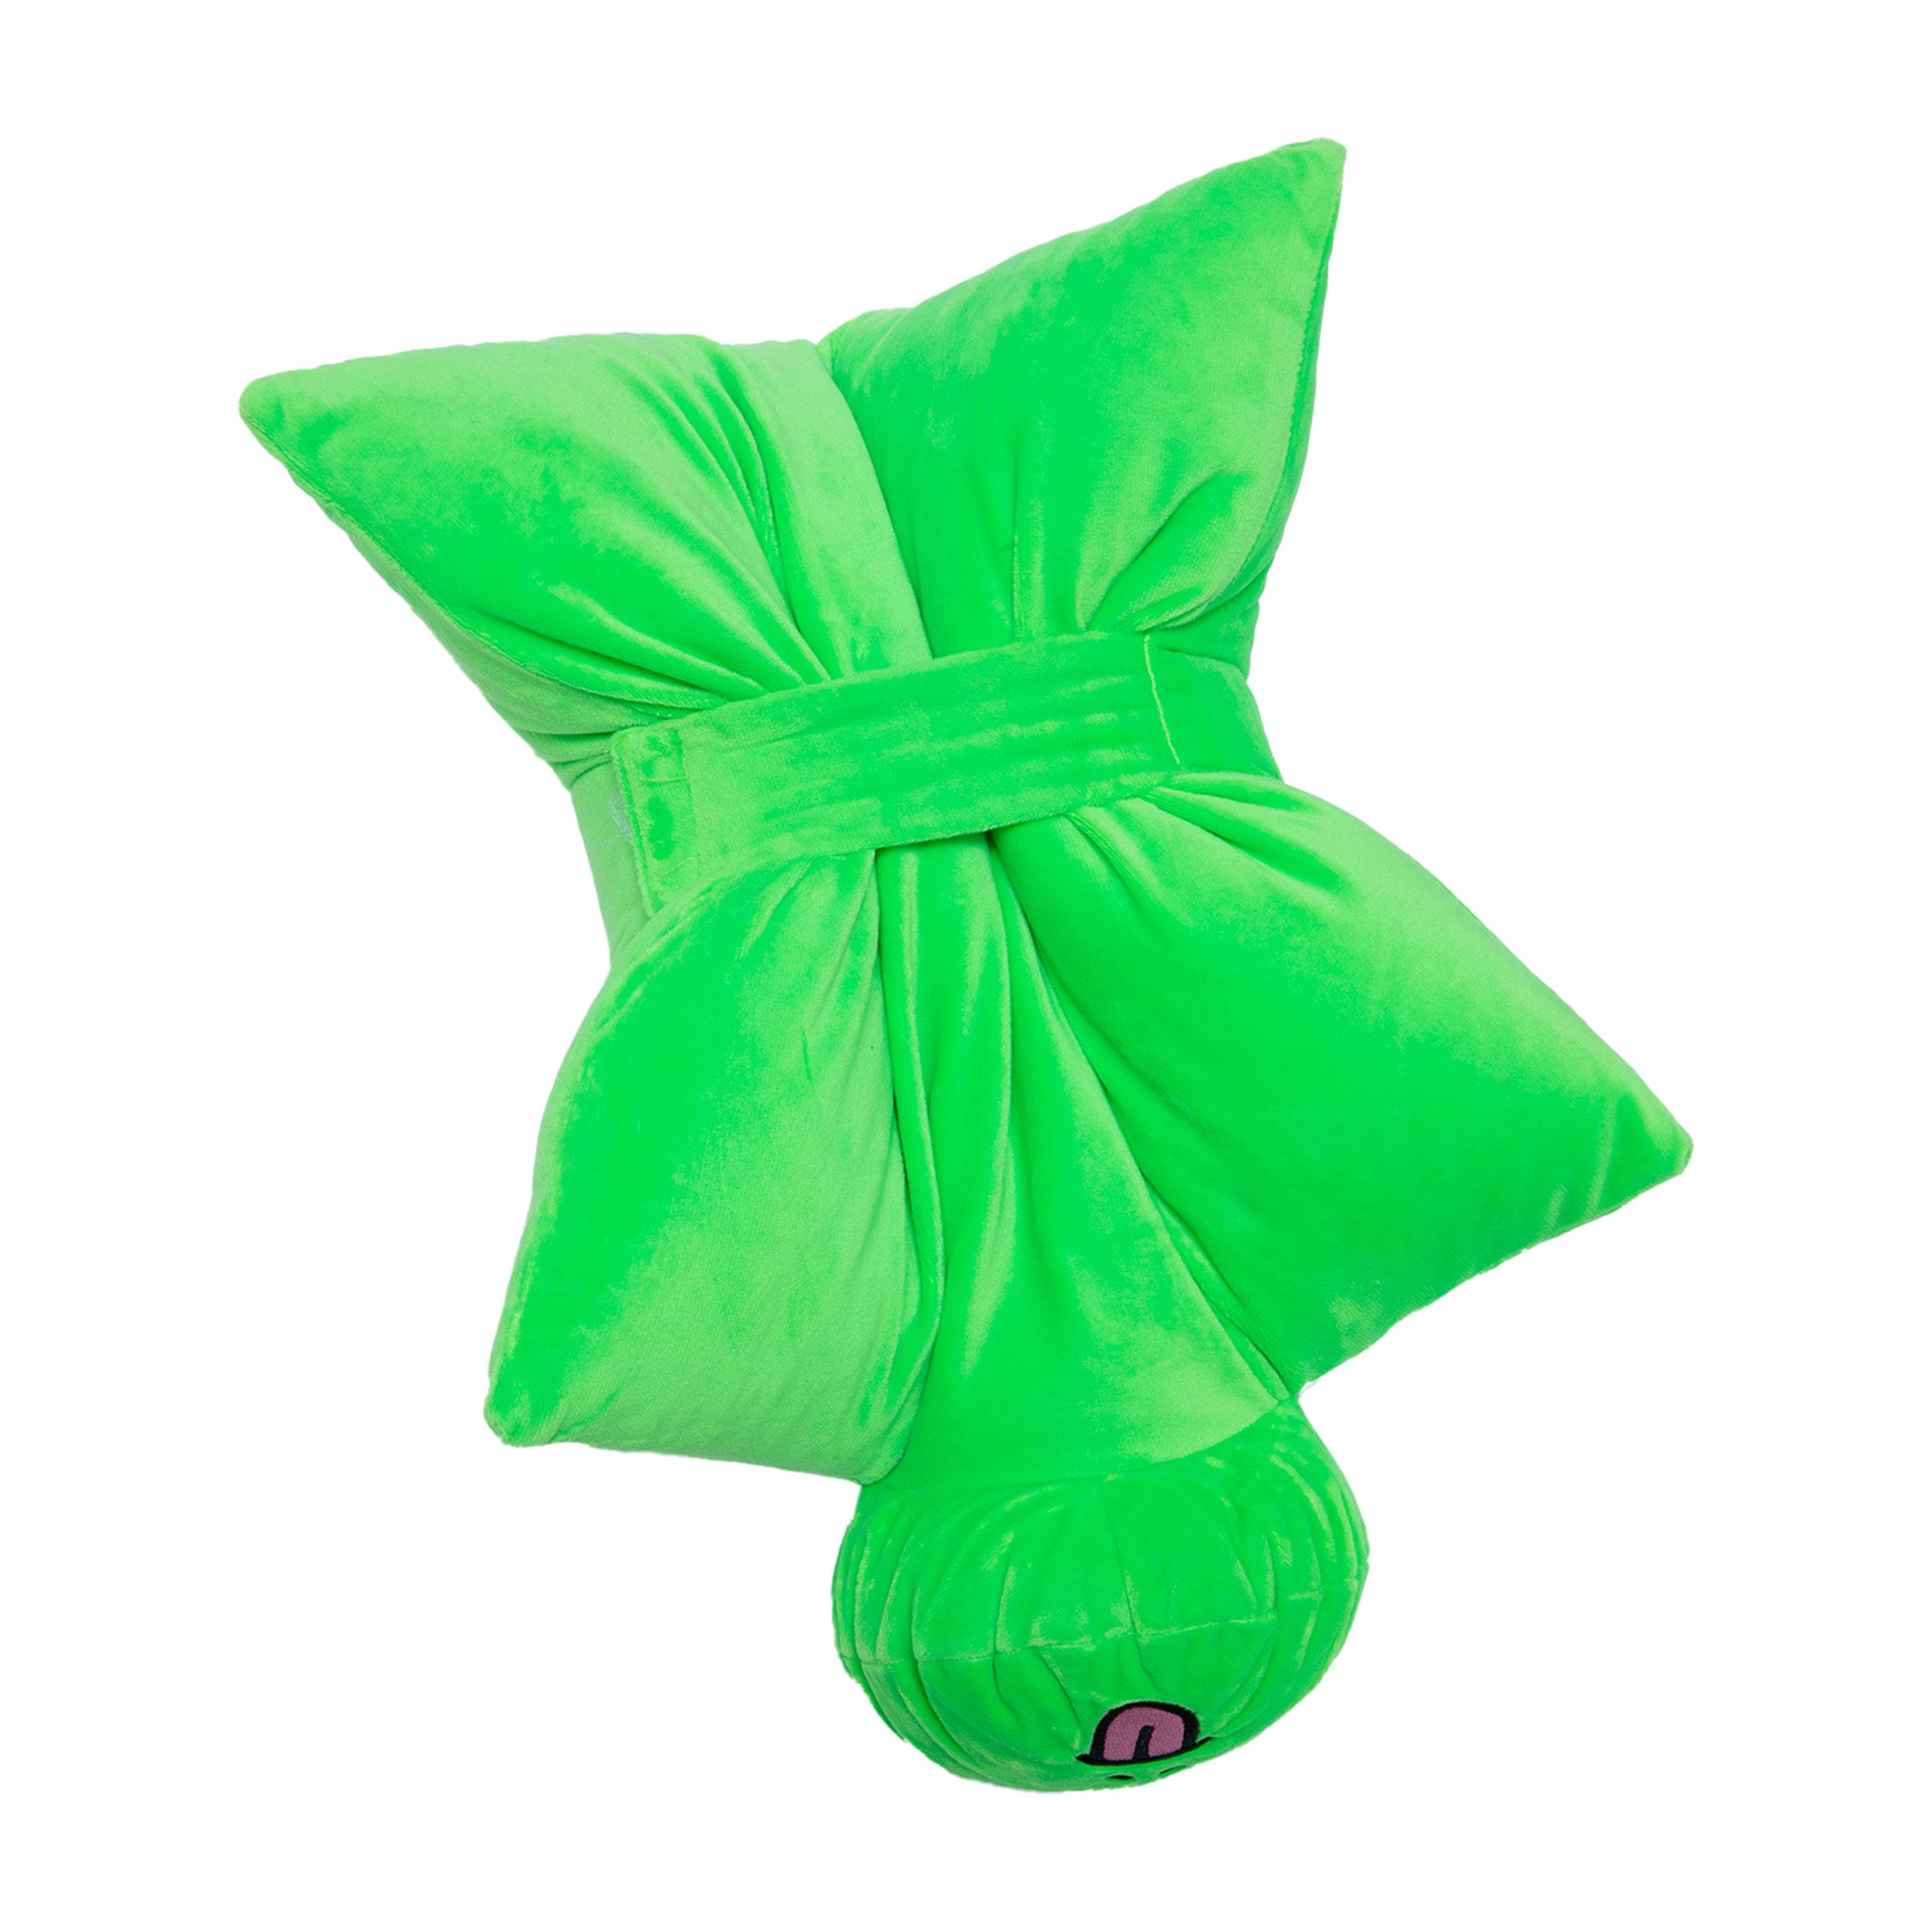 Lord Alien Pillow Friend (Green)